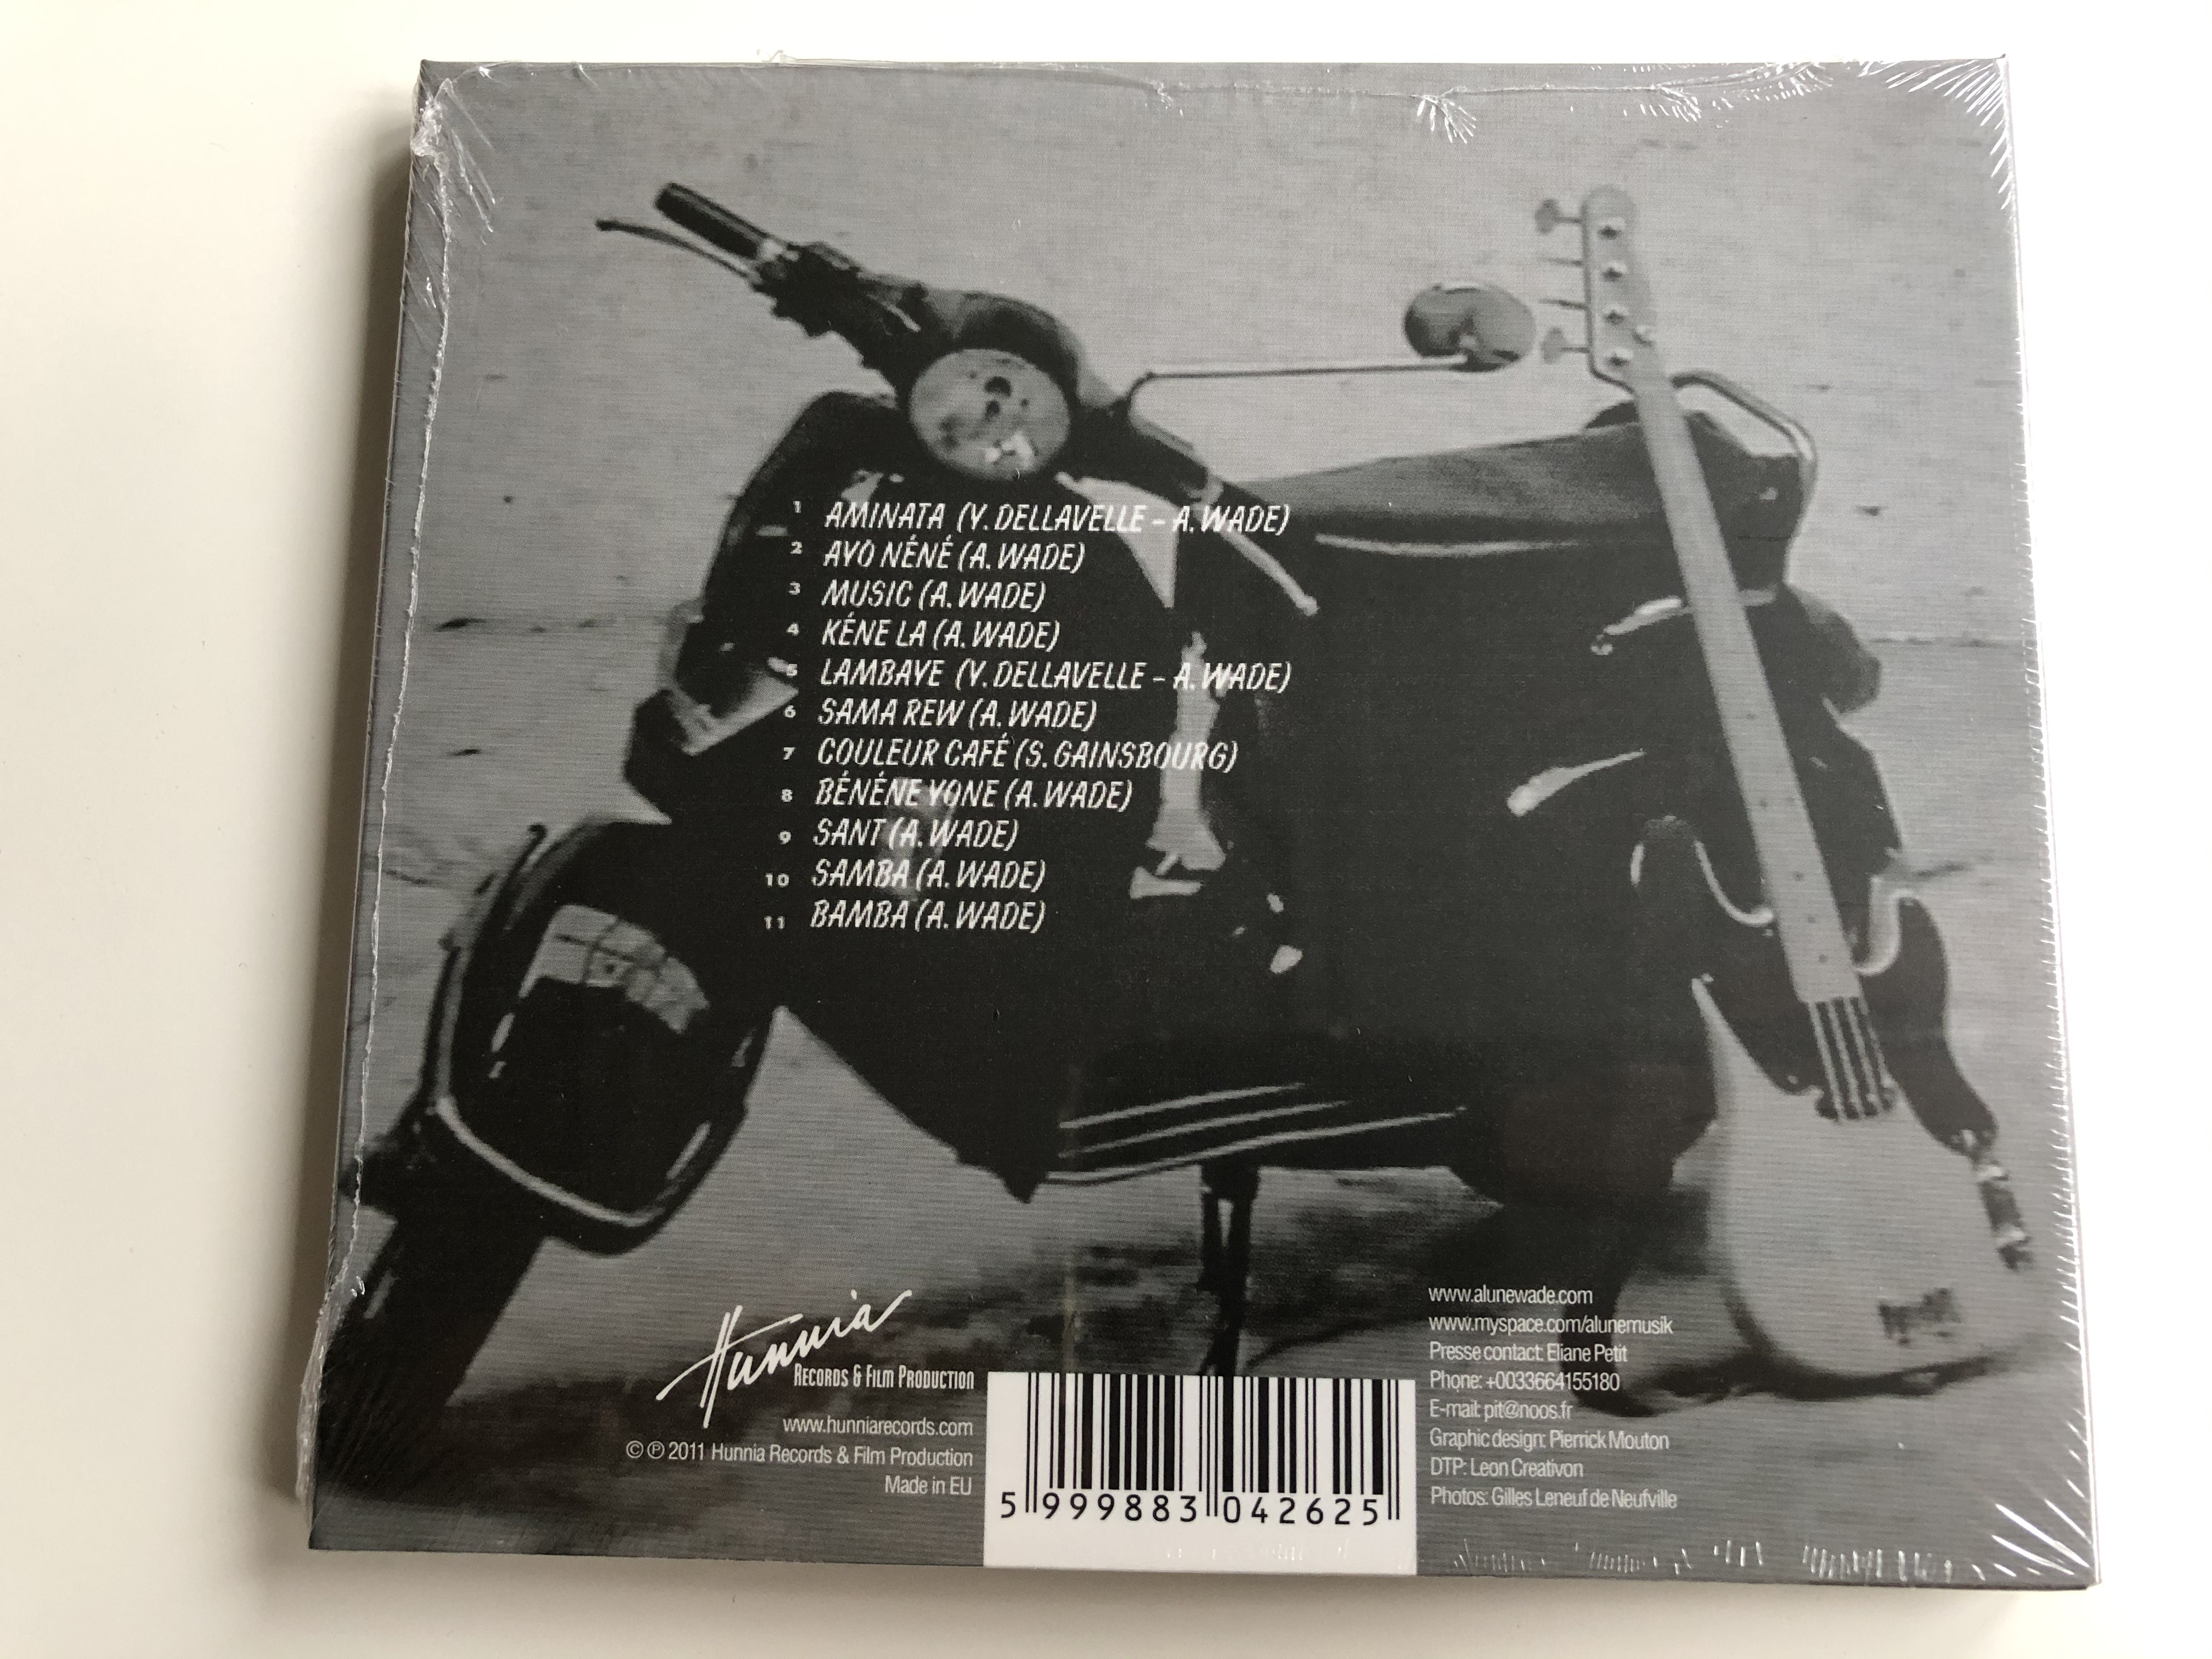 alune-ayo-nene-hunnia-records-film-production-audio-cd-2011-hrcd1103-2-.jpg